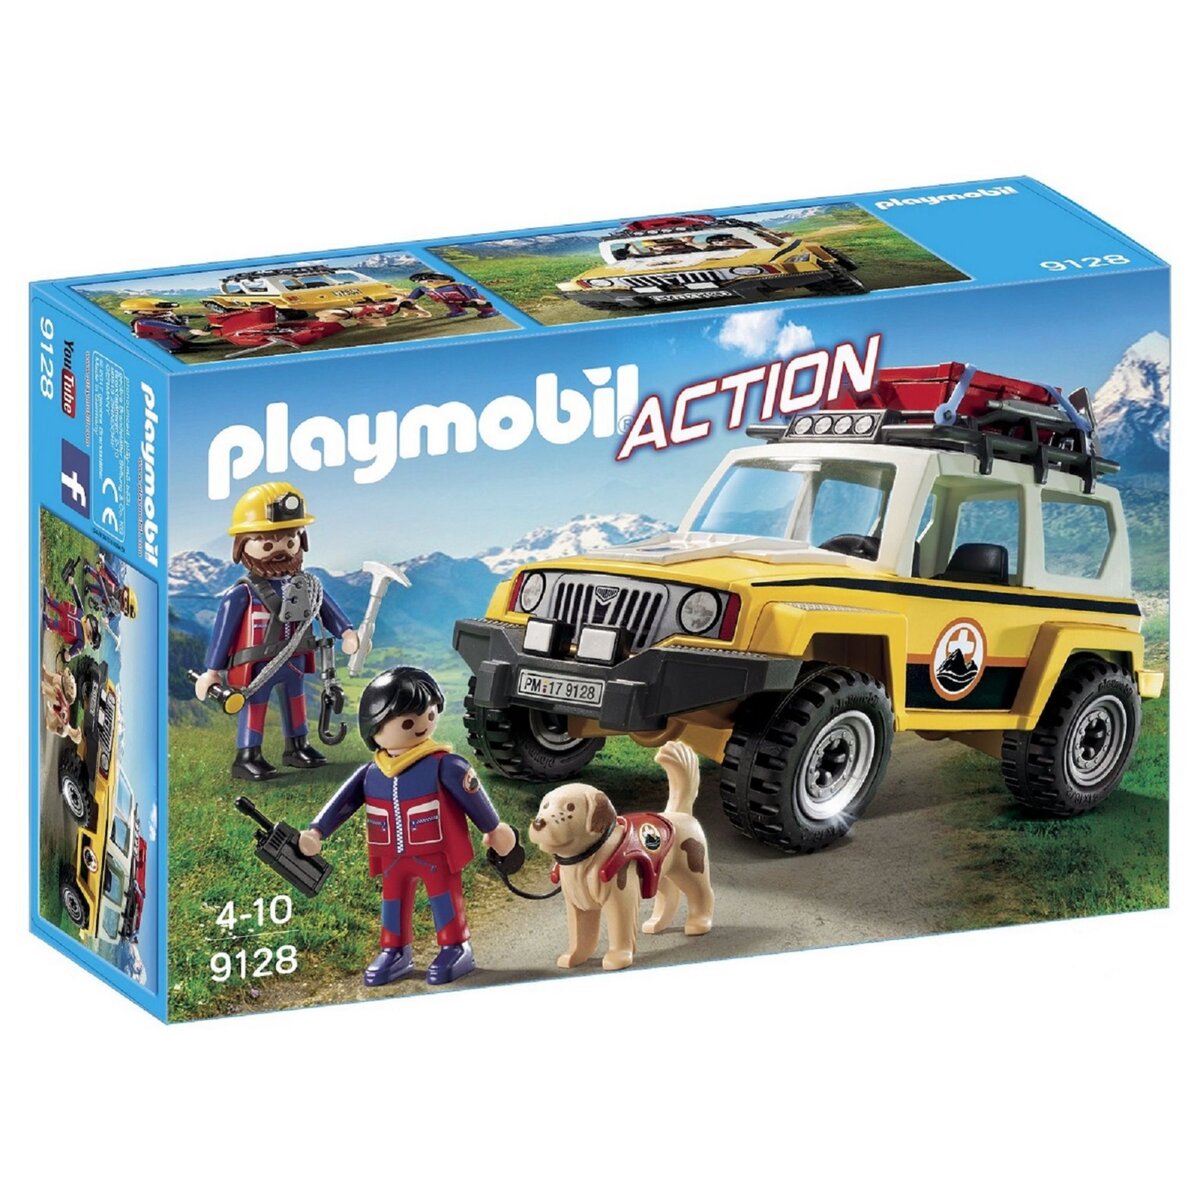 PLAYMOBIL 9128 - Action - Secouristes avec véhicule